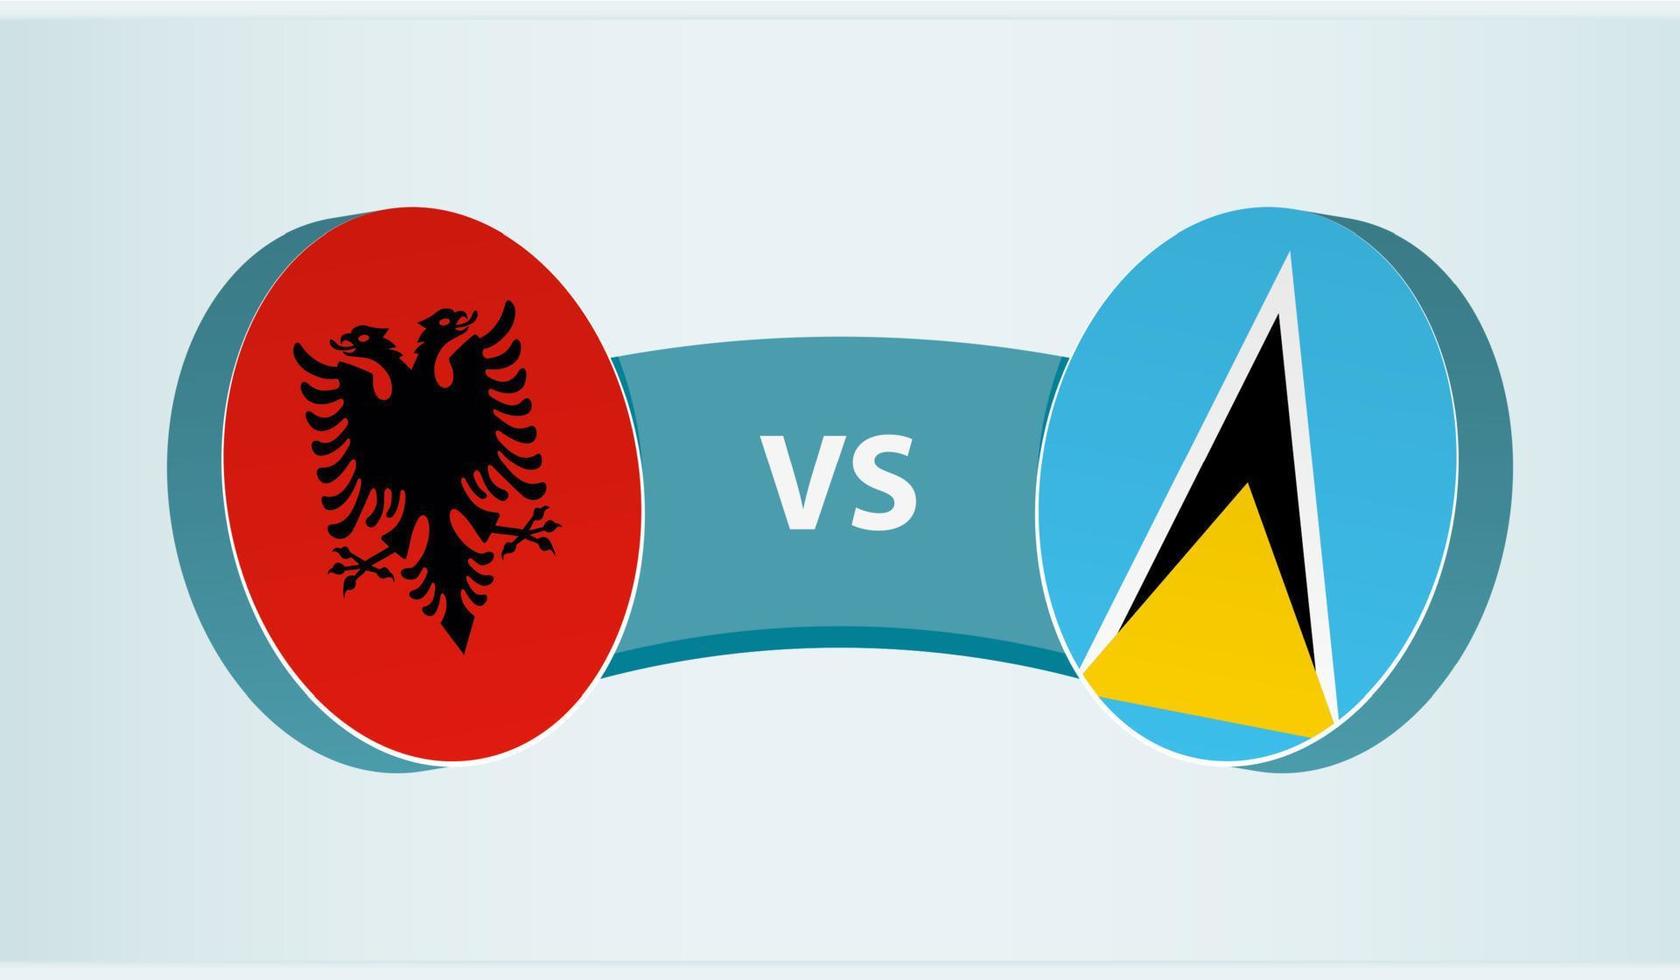 Albania versus Saint Lucia, team sports competition concept. vector